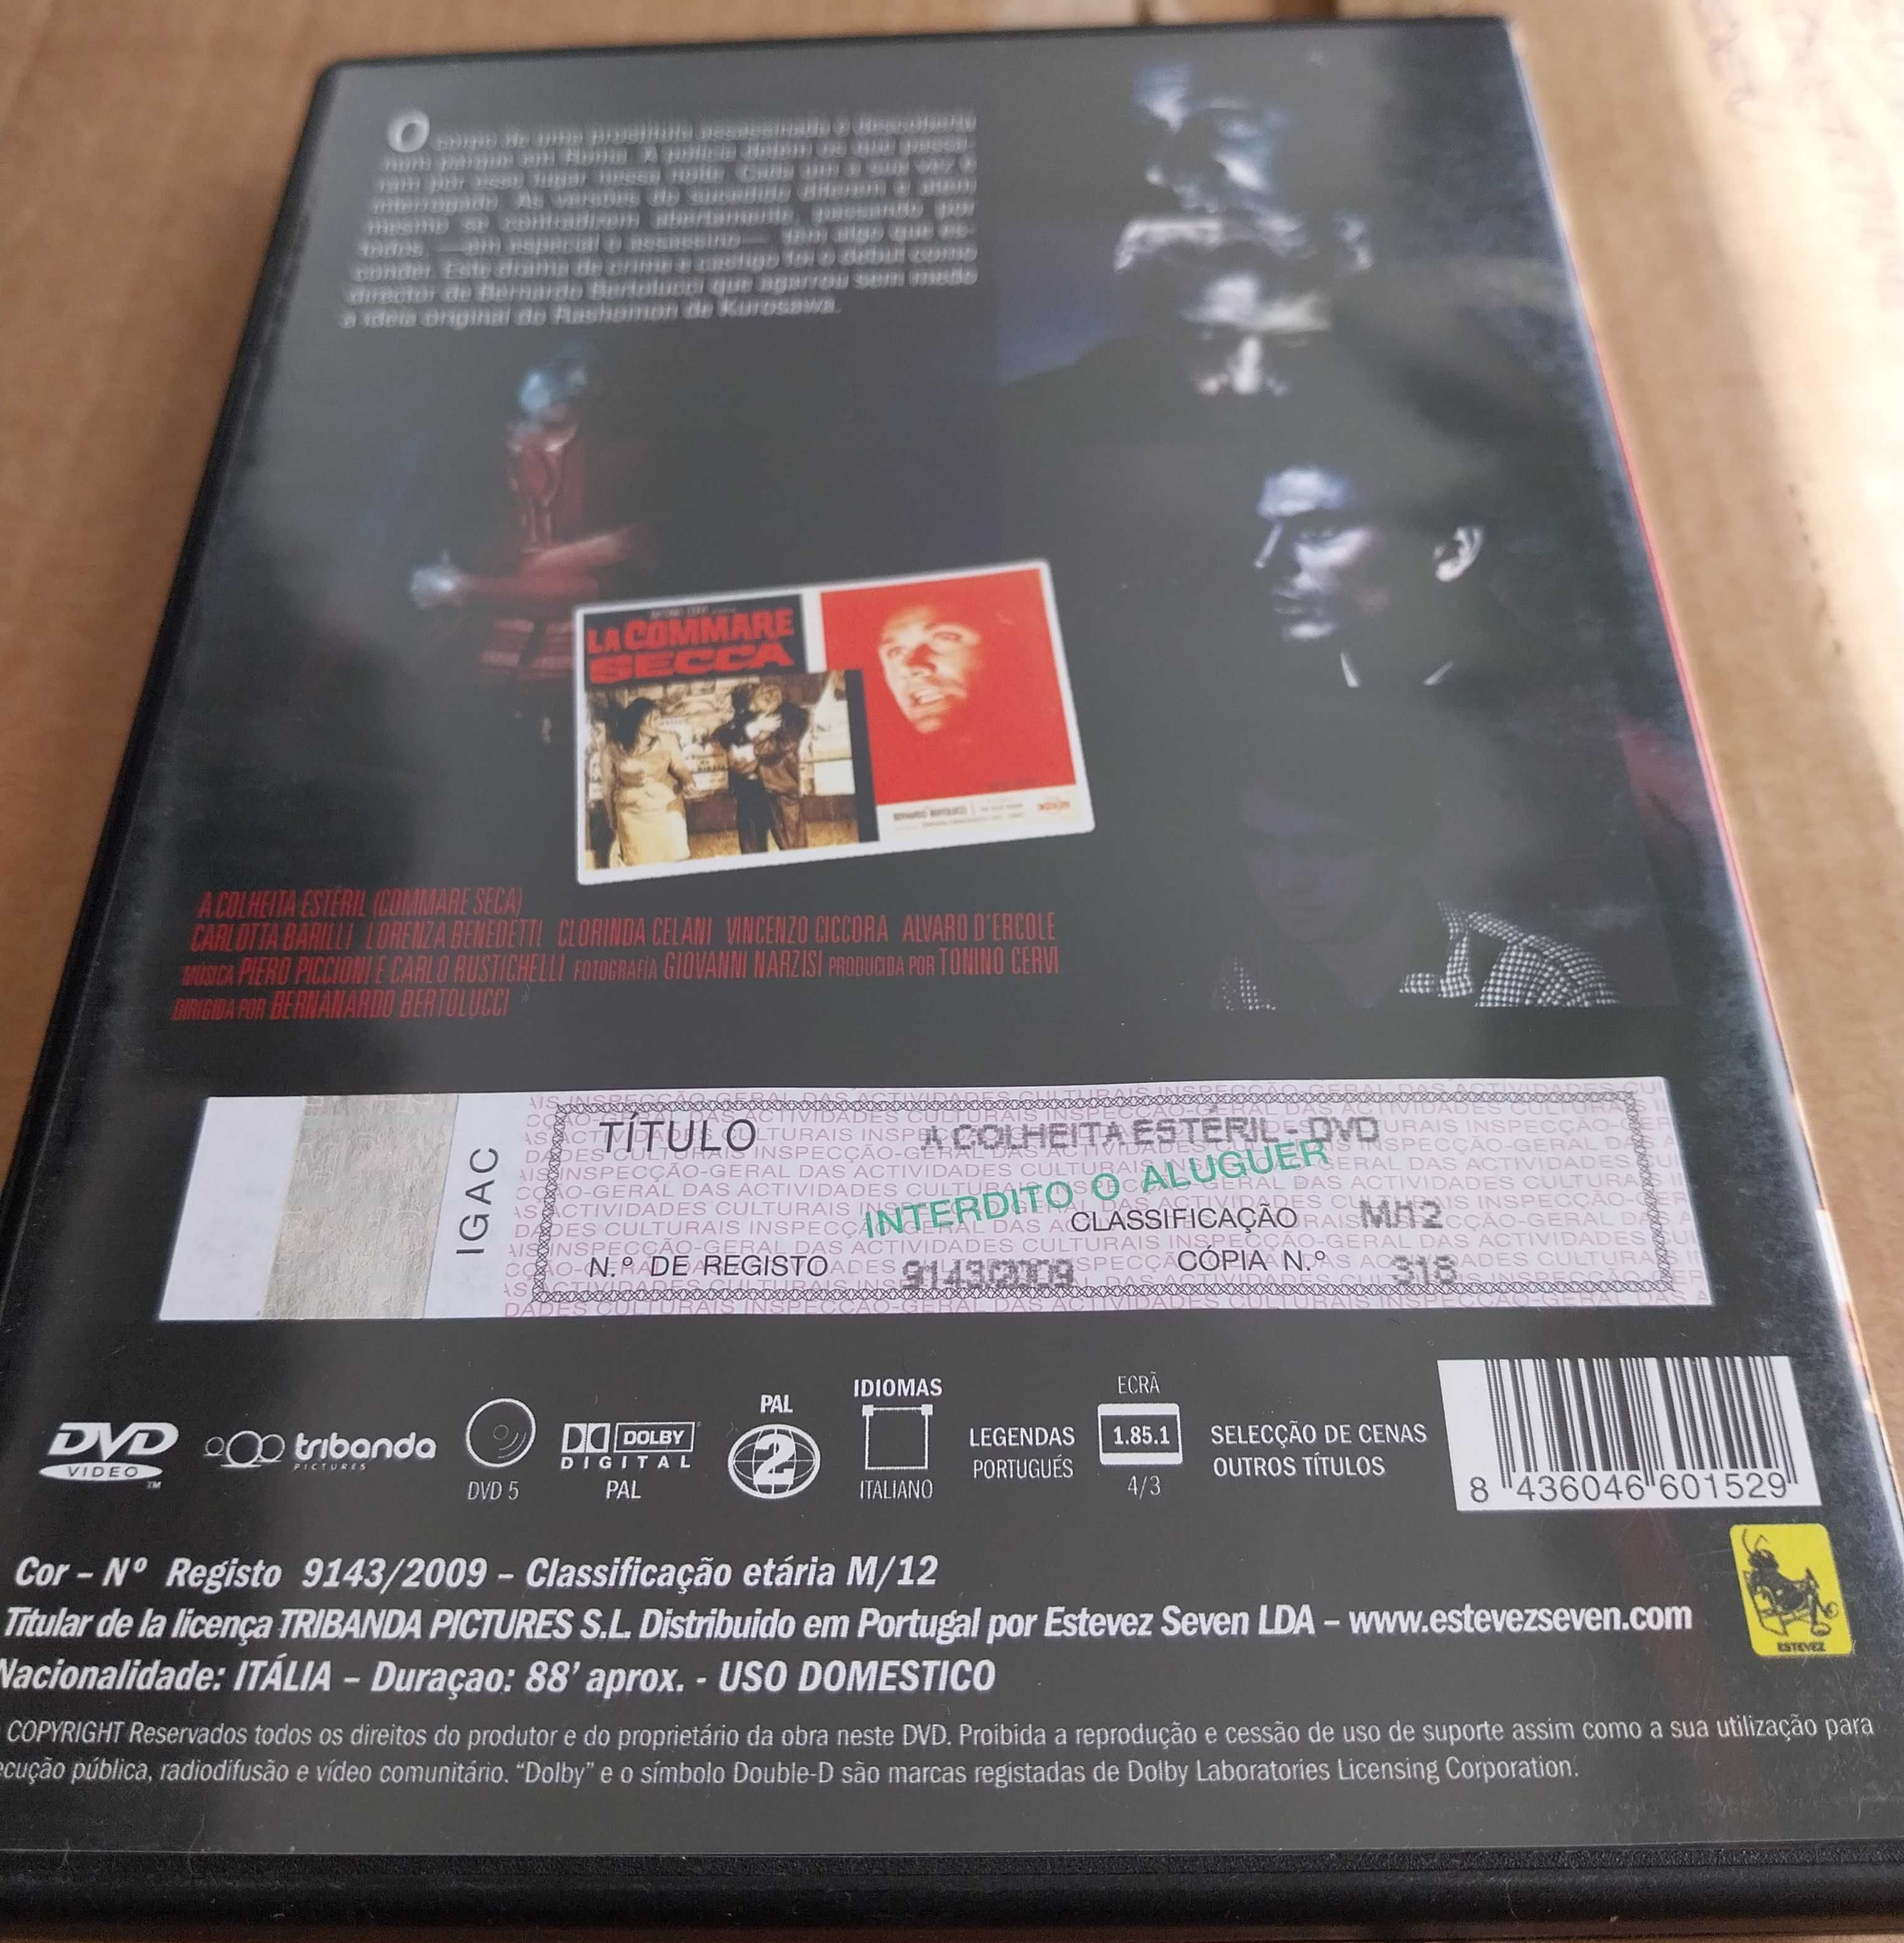 DVD “A colheita estéril”, de Bernardo Bertolucci